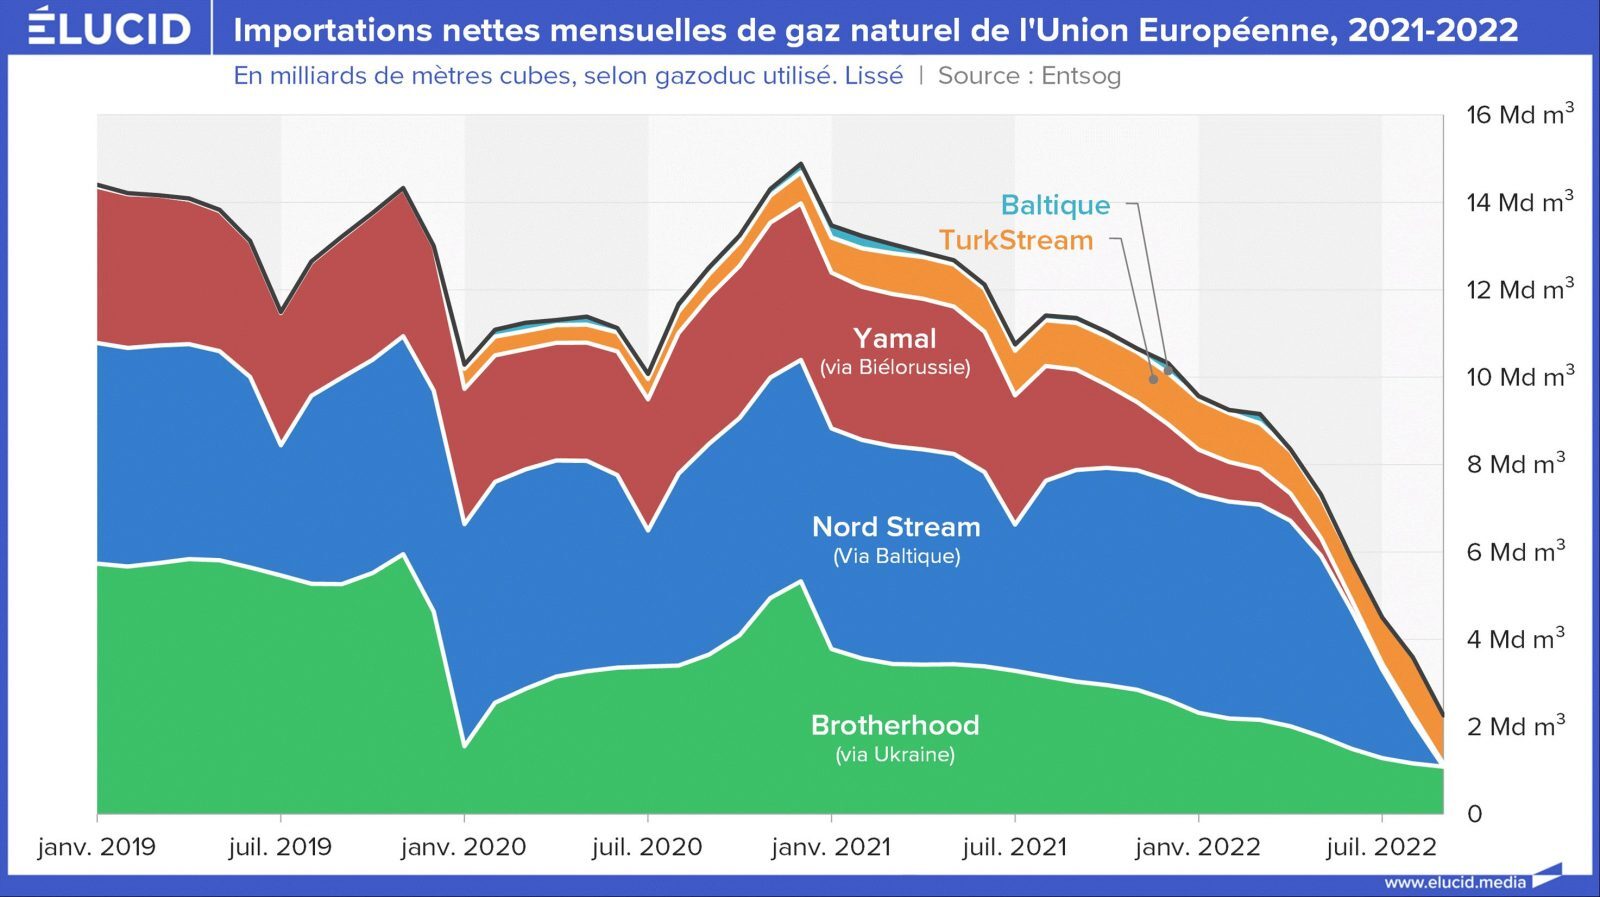 importations nettes mensuelles gaz union europeenne 2022